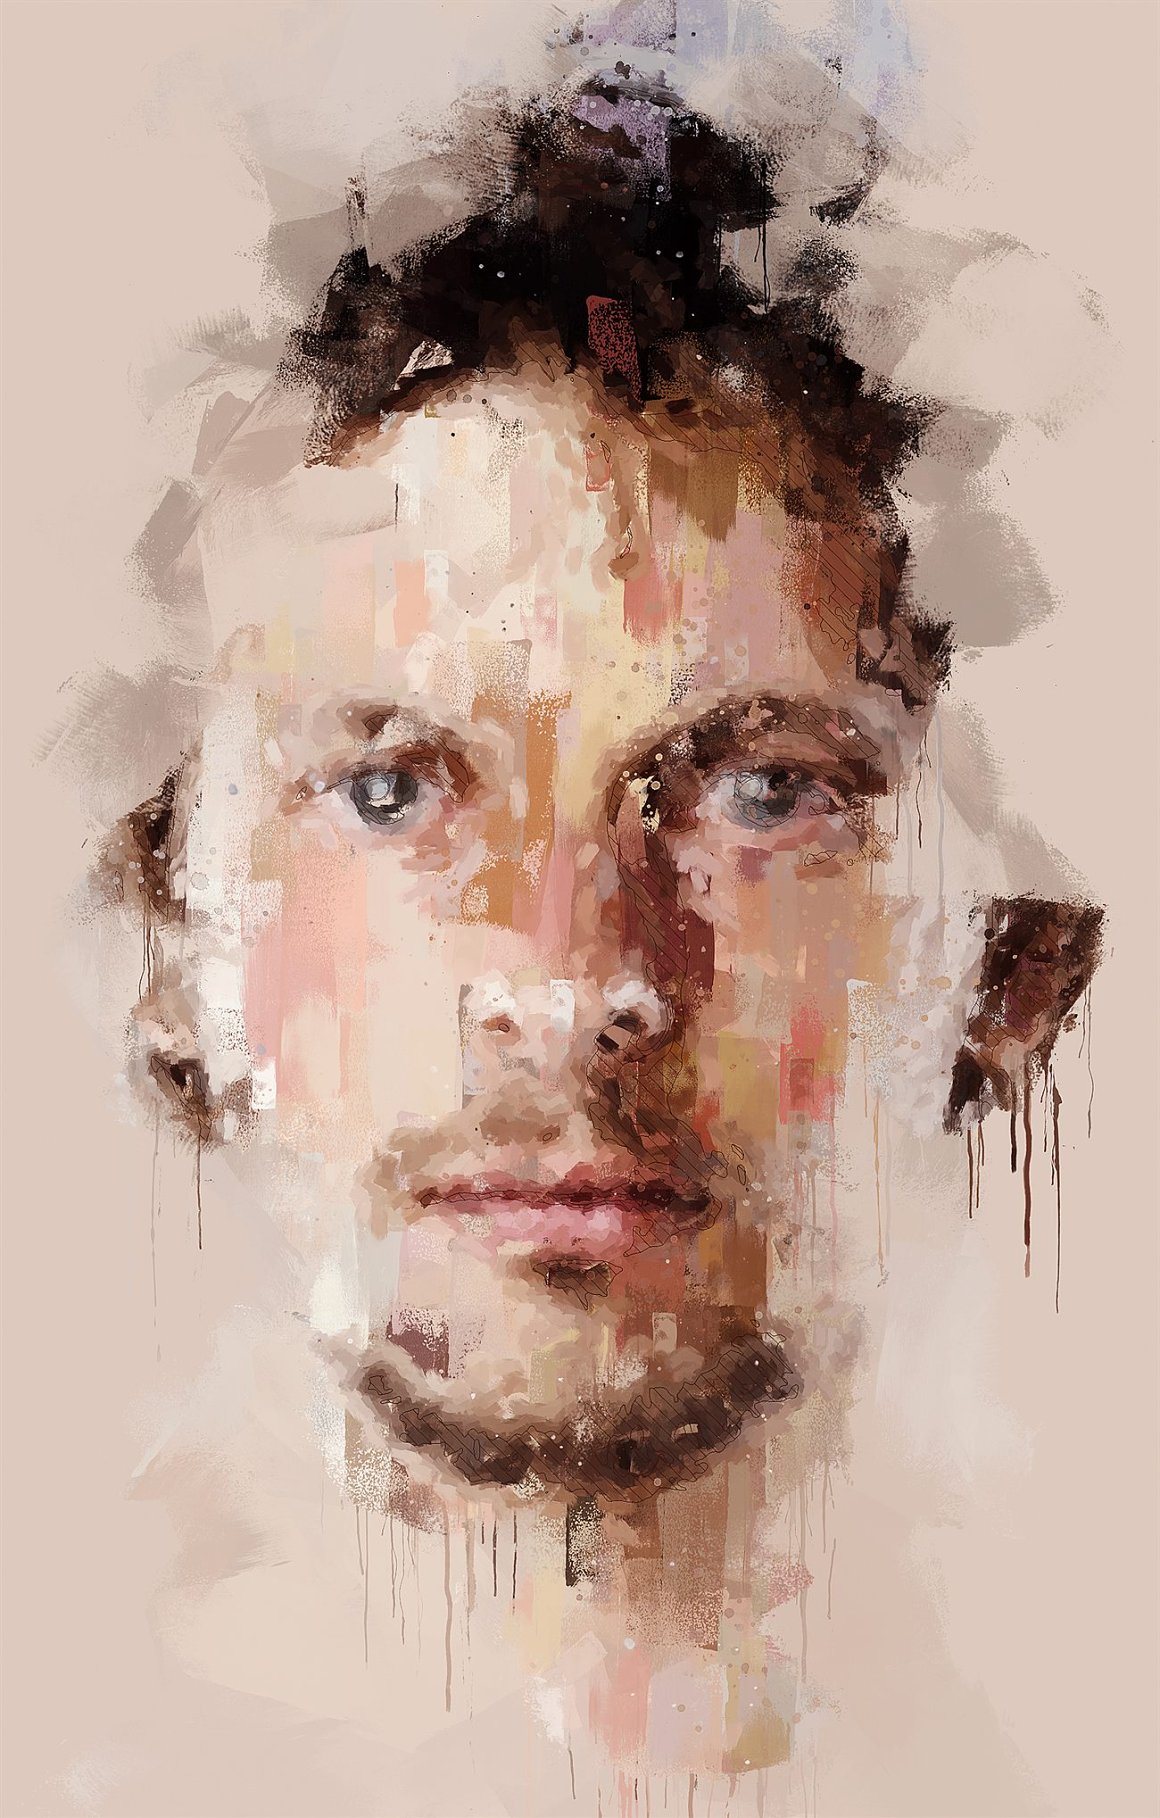 A man's face using a filter.